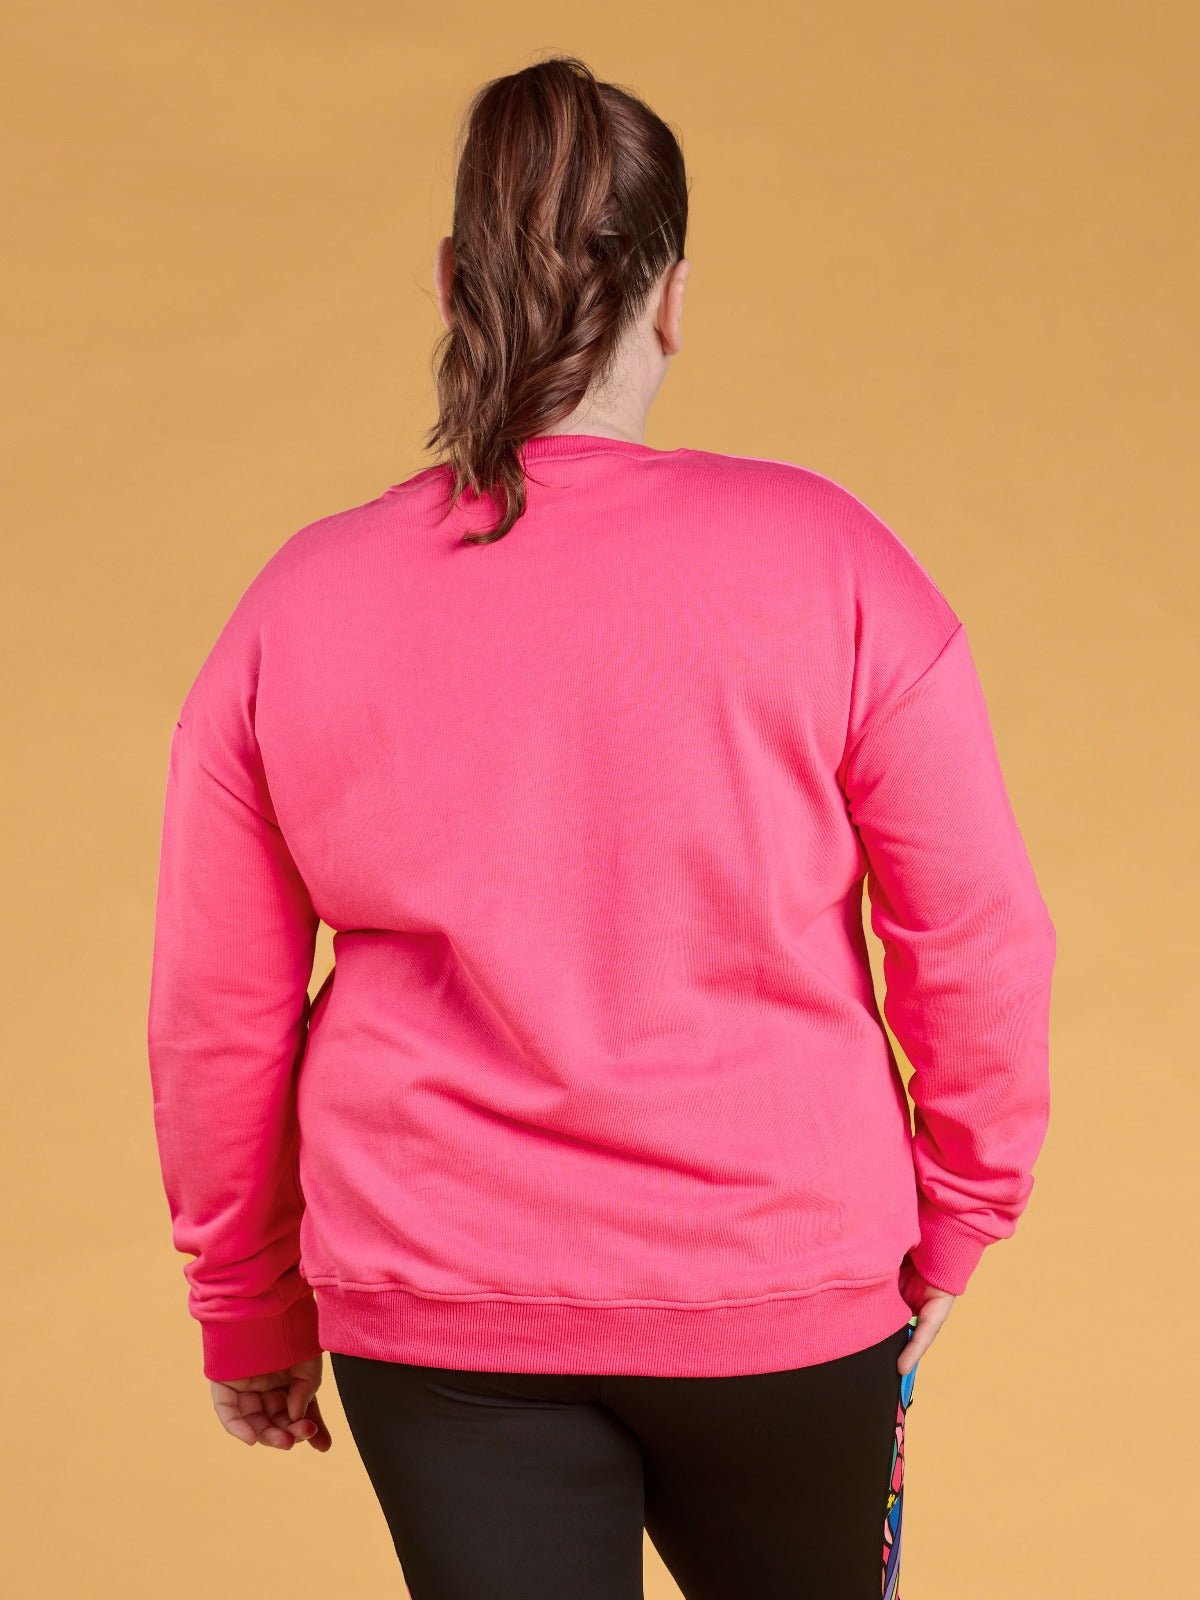 Rainbow at Heart Organic Cotton Sweatshirt - Dolly Pink - pink long sweatshirt plus size